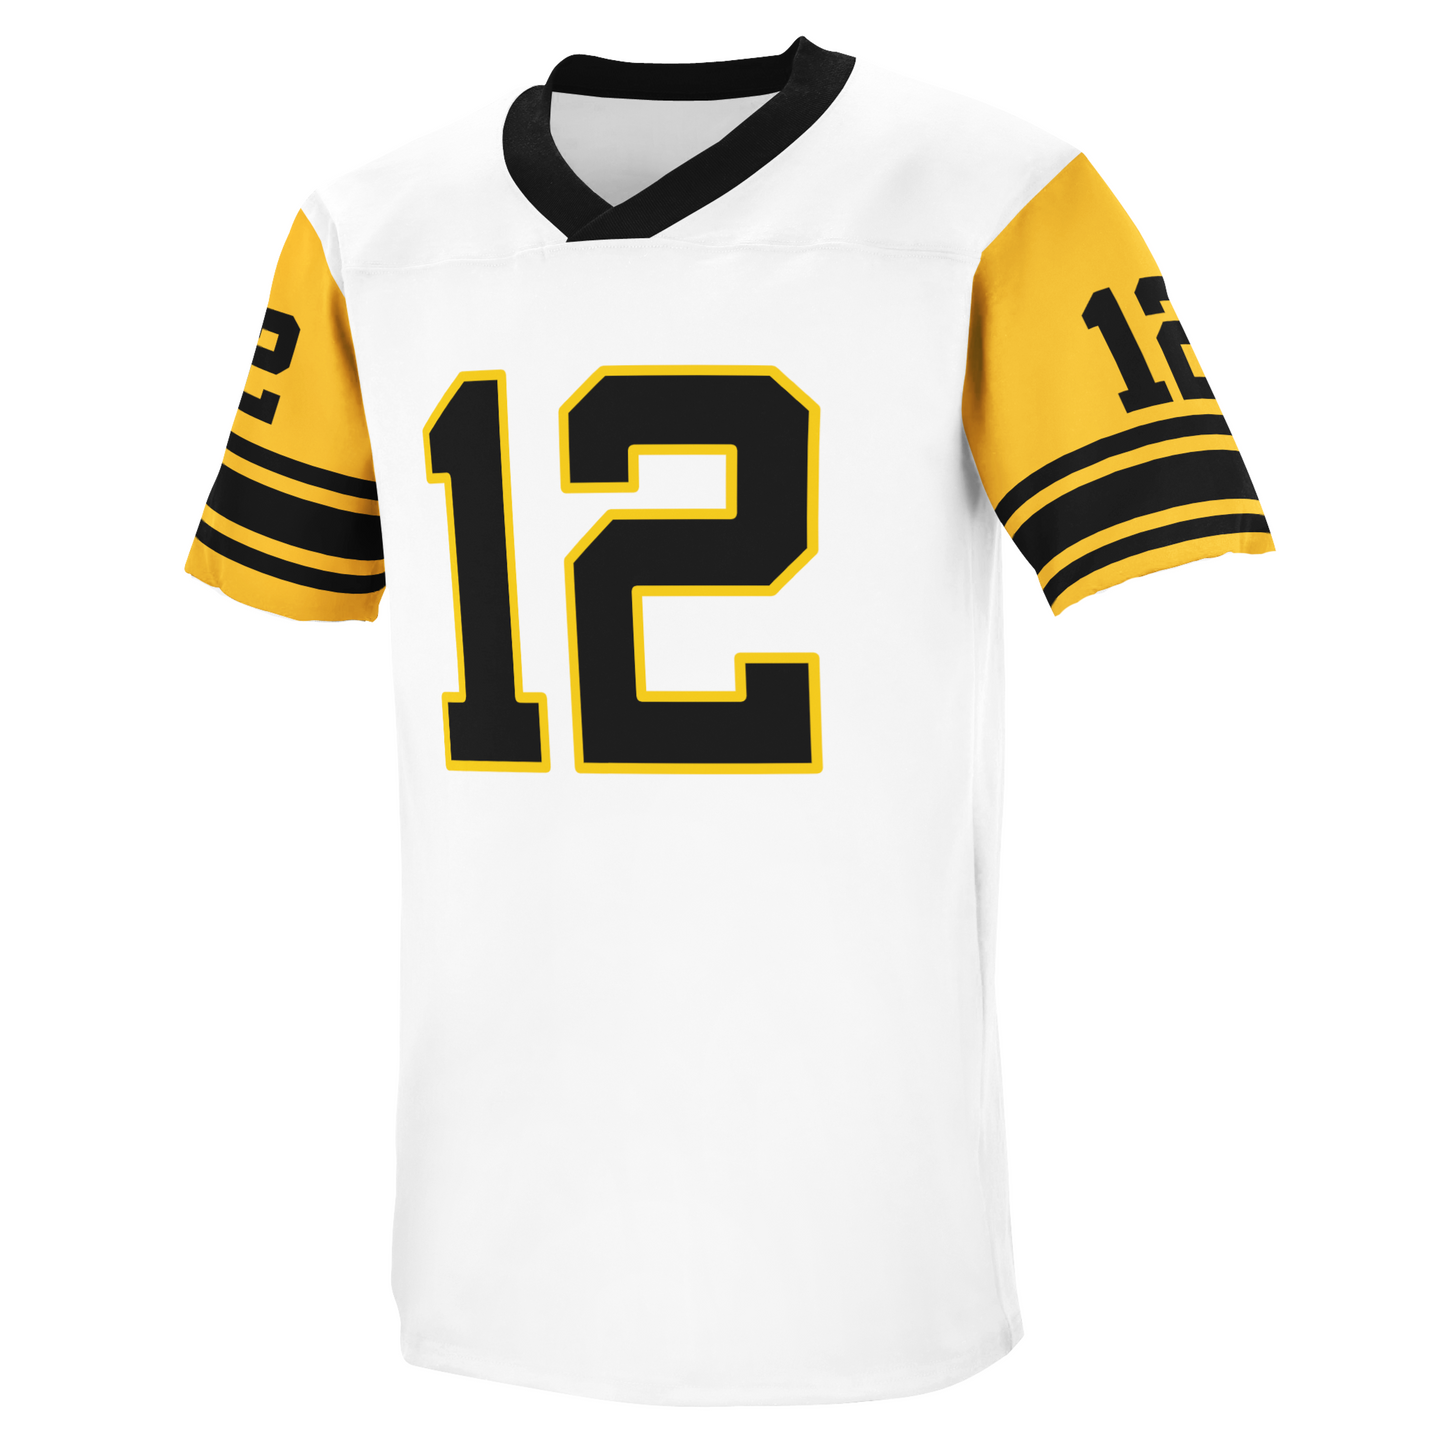 Rhode Island Steelers Jersey - Black - 2XL - Royal Retros